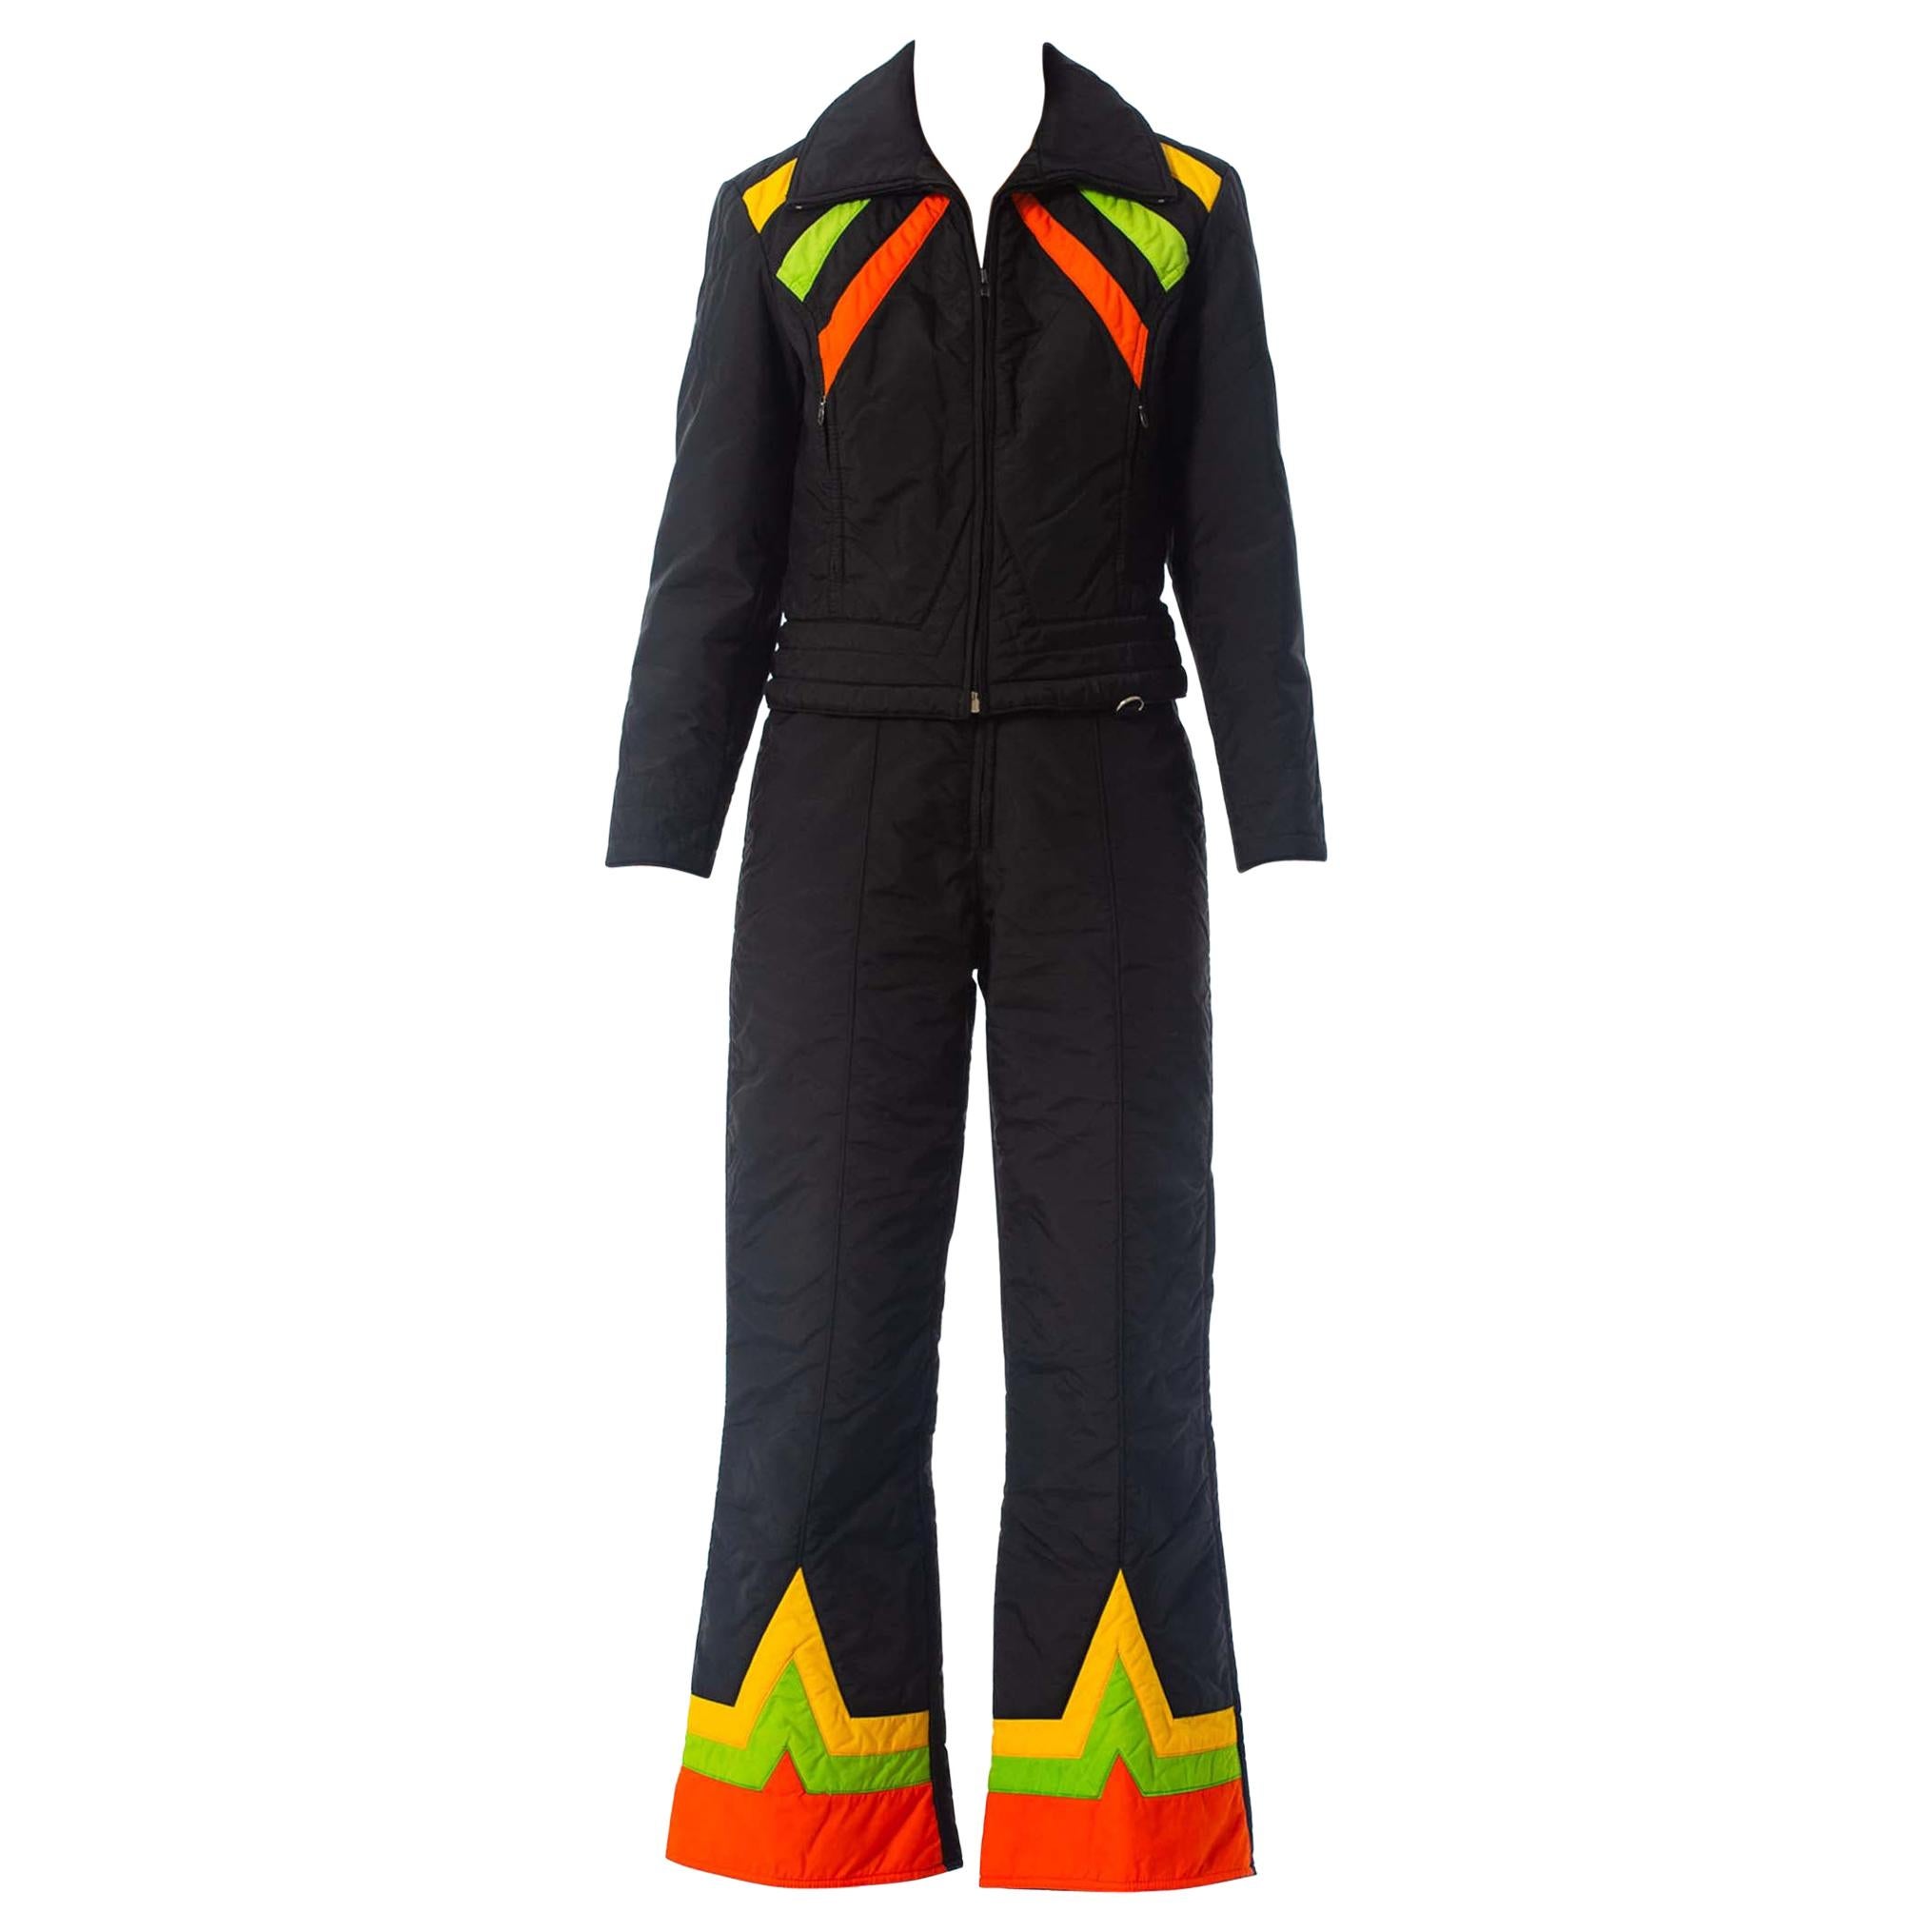 1970S Black Polyester Ski Wear Ensemble With Orange & Yellow Details